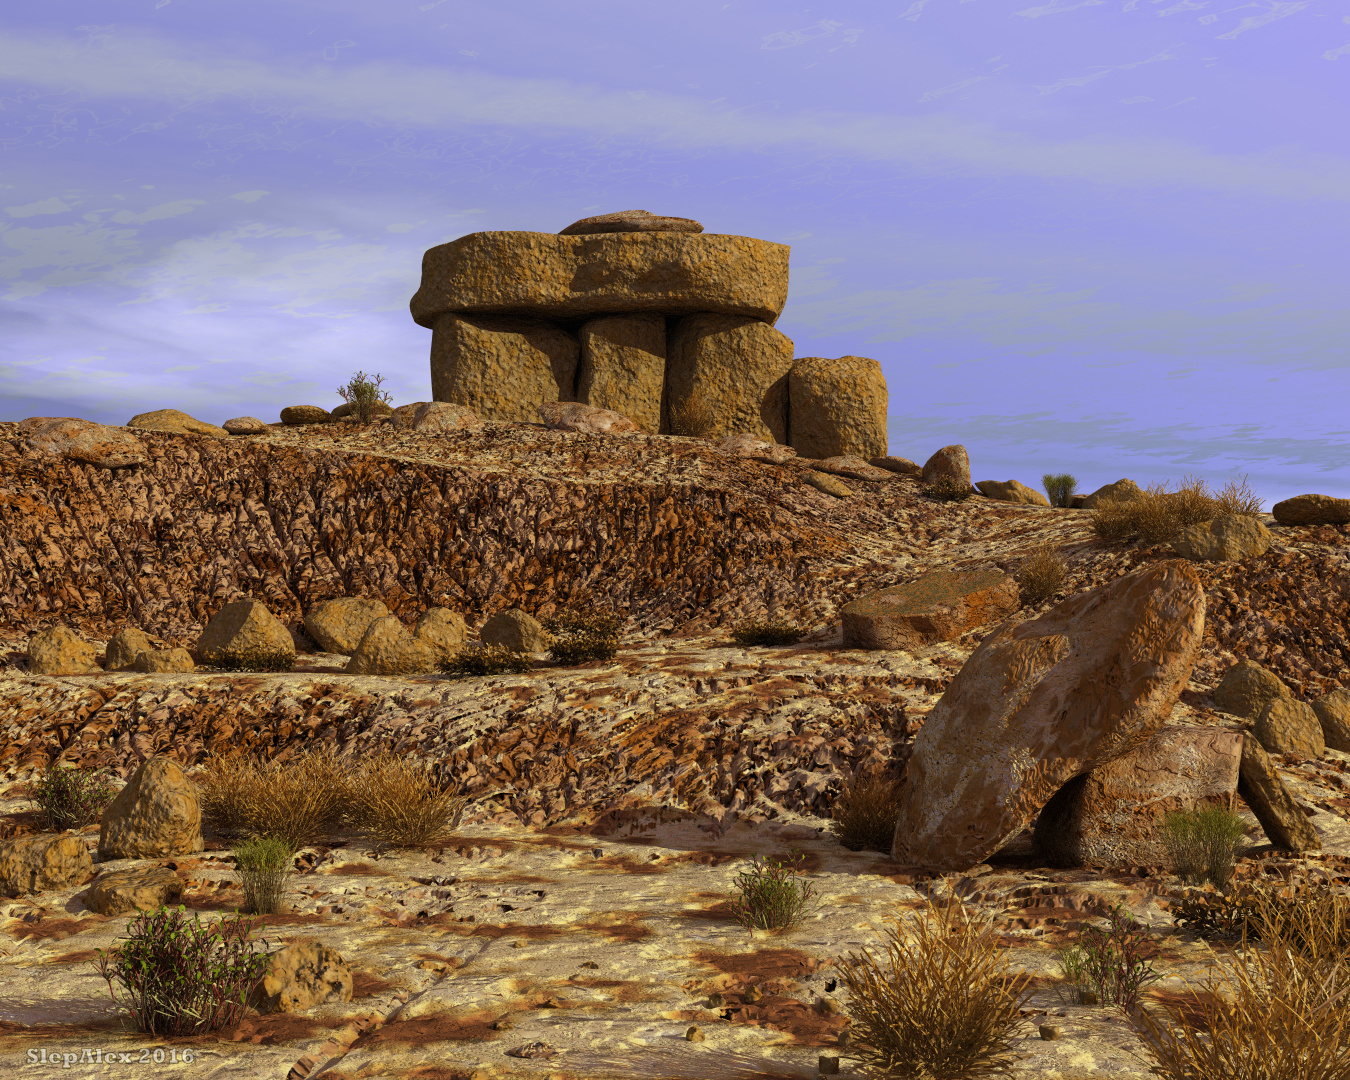 Stones in the desert